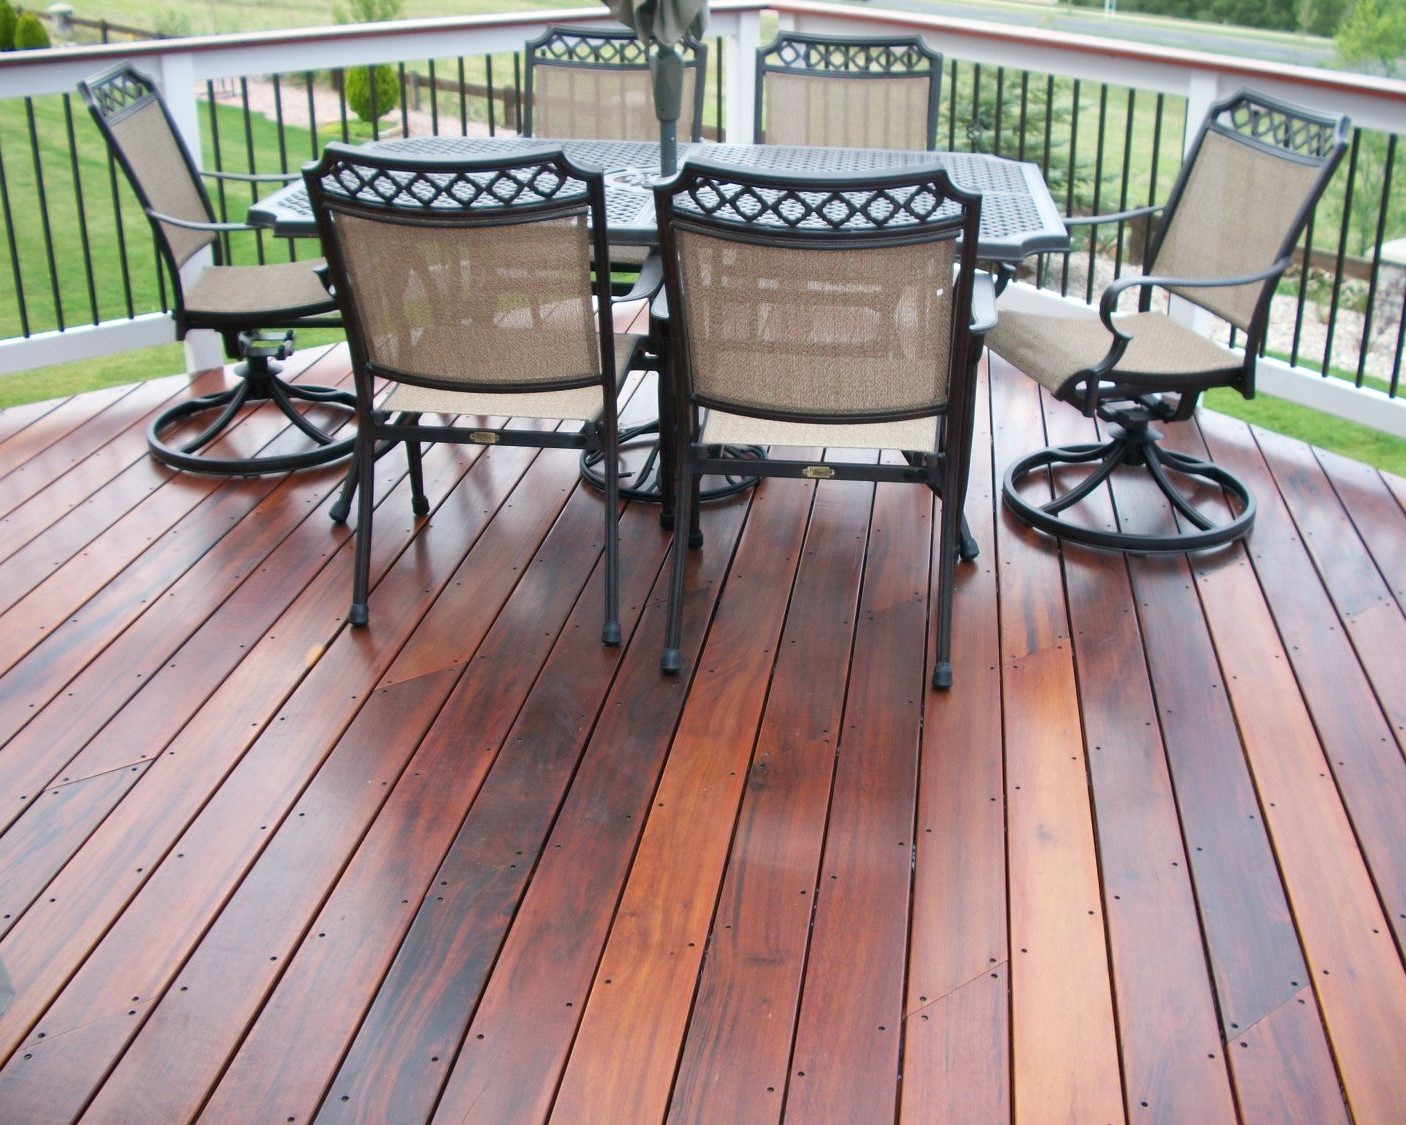 Custom hardwood deck built with Tigerwood and a wood and metal baluster railig